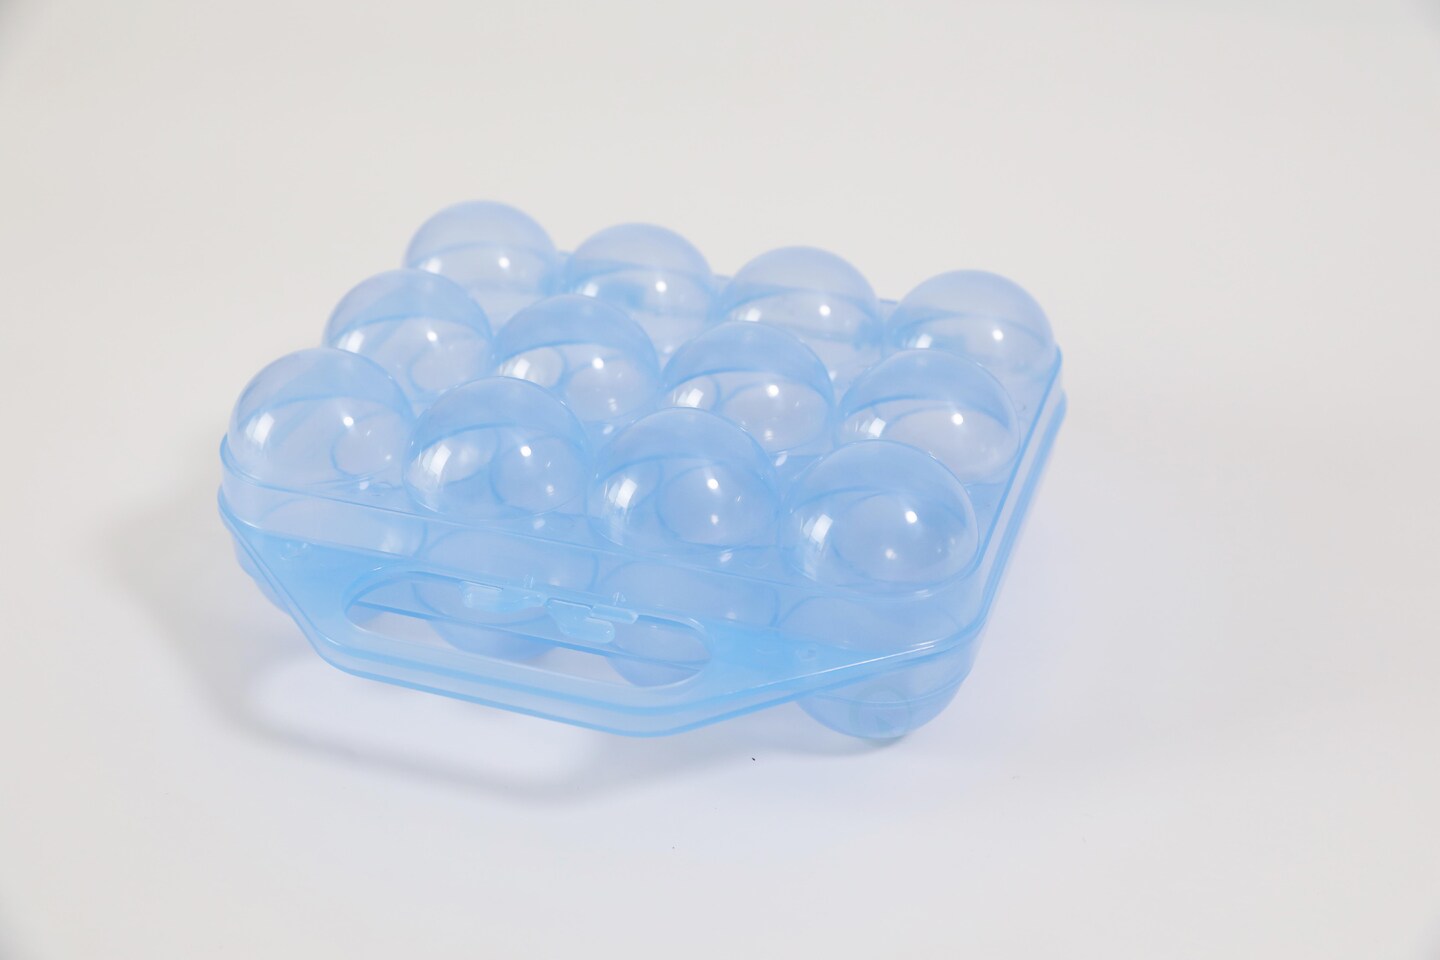 Basicwise Clear Plastic Egg Carton, 12 Egg Holder Carrying Case